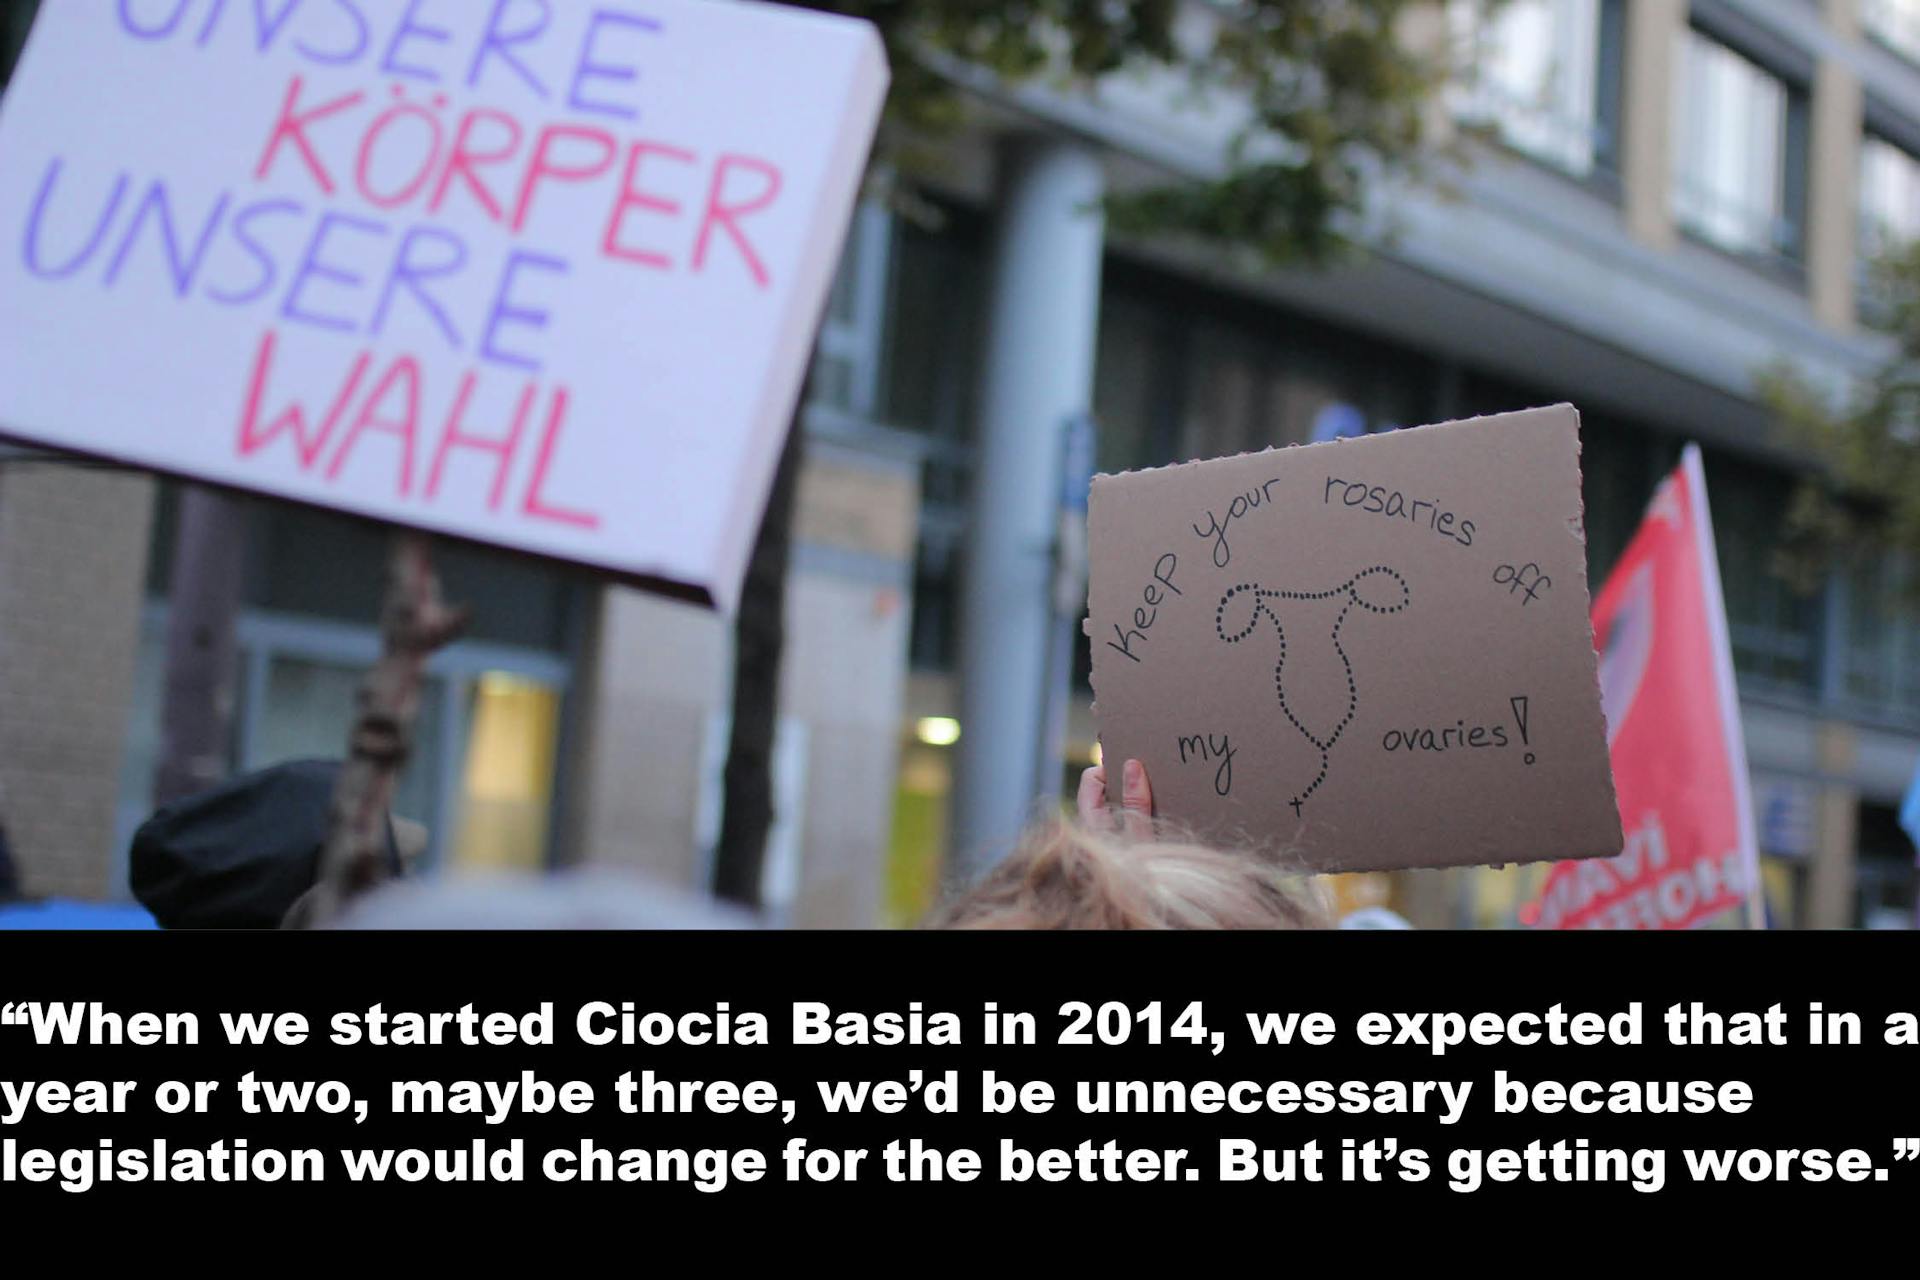 Ciocia Basia - situation getting worse